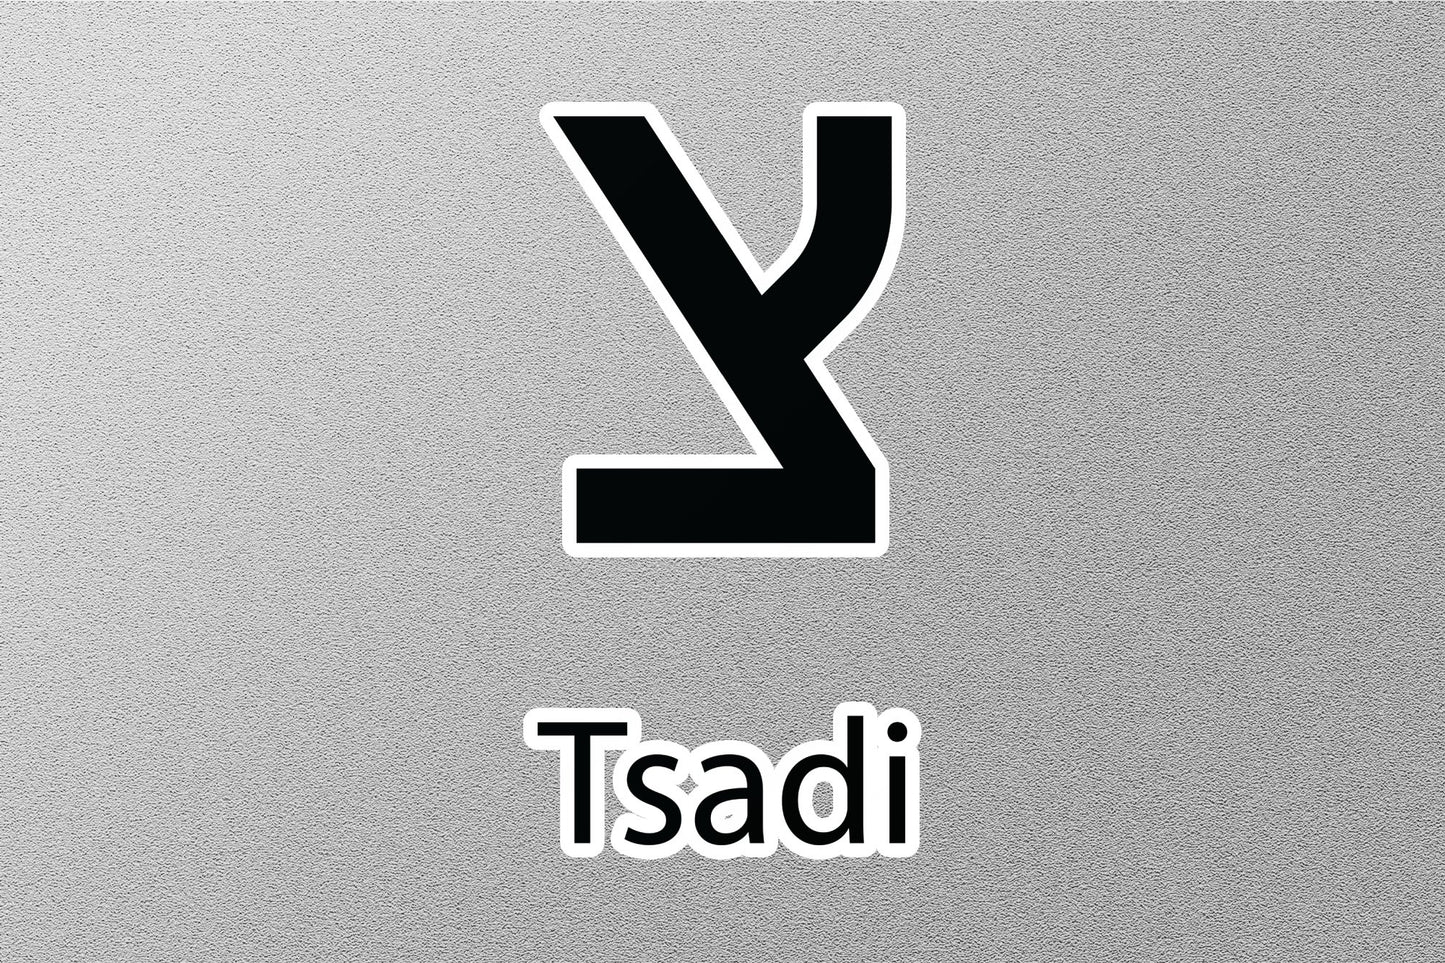 Tsadi Hebrew Alphabet Sticker